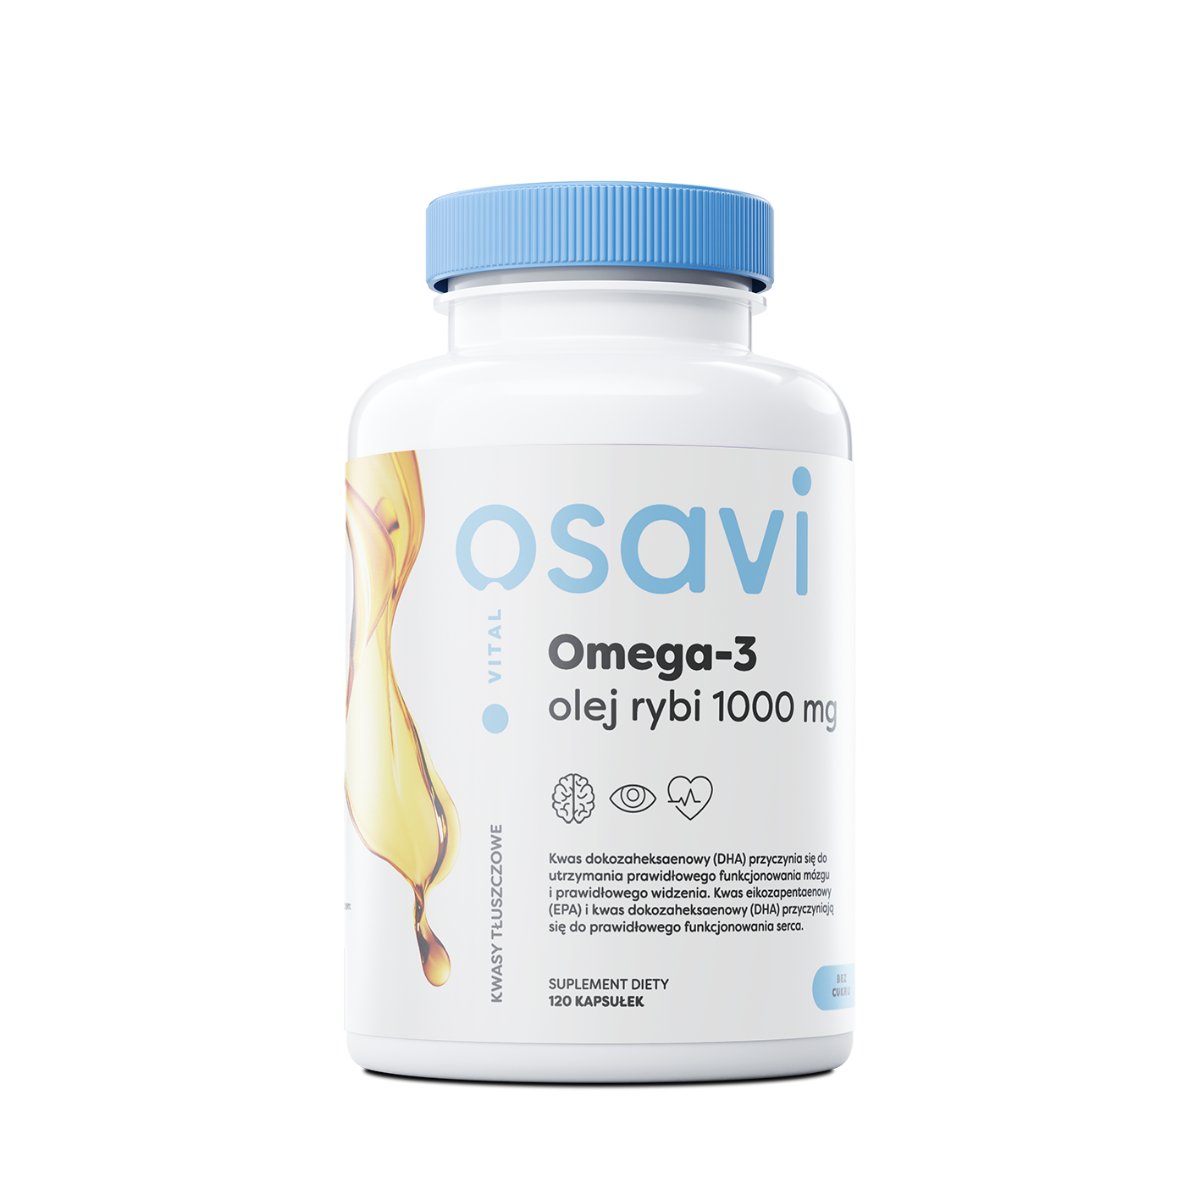 OSAVI Omega-3 Olej Rybi 1000mg 120 Kapsułek żelowych Cytryna